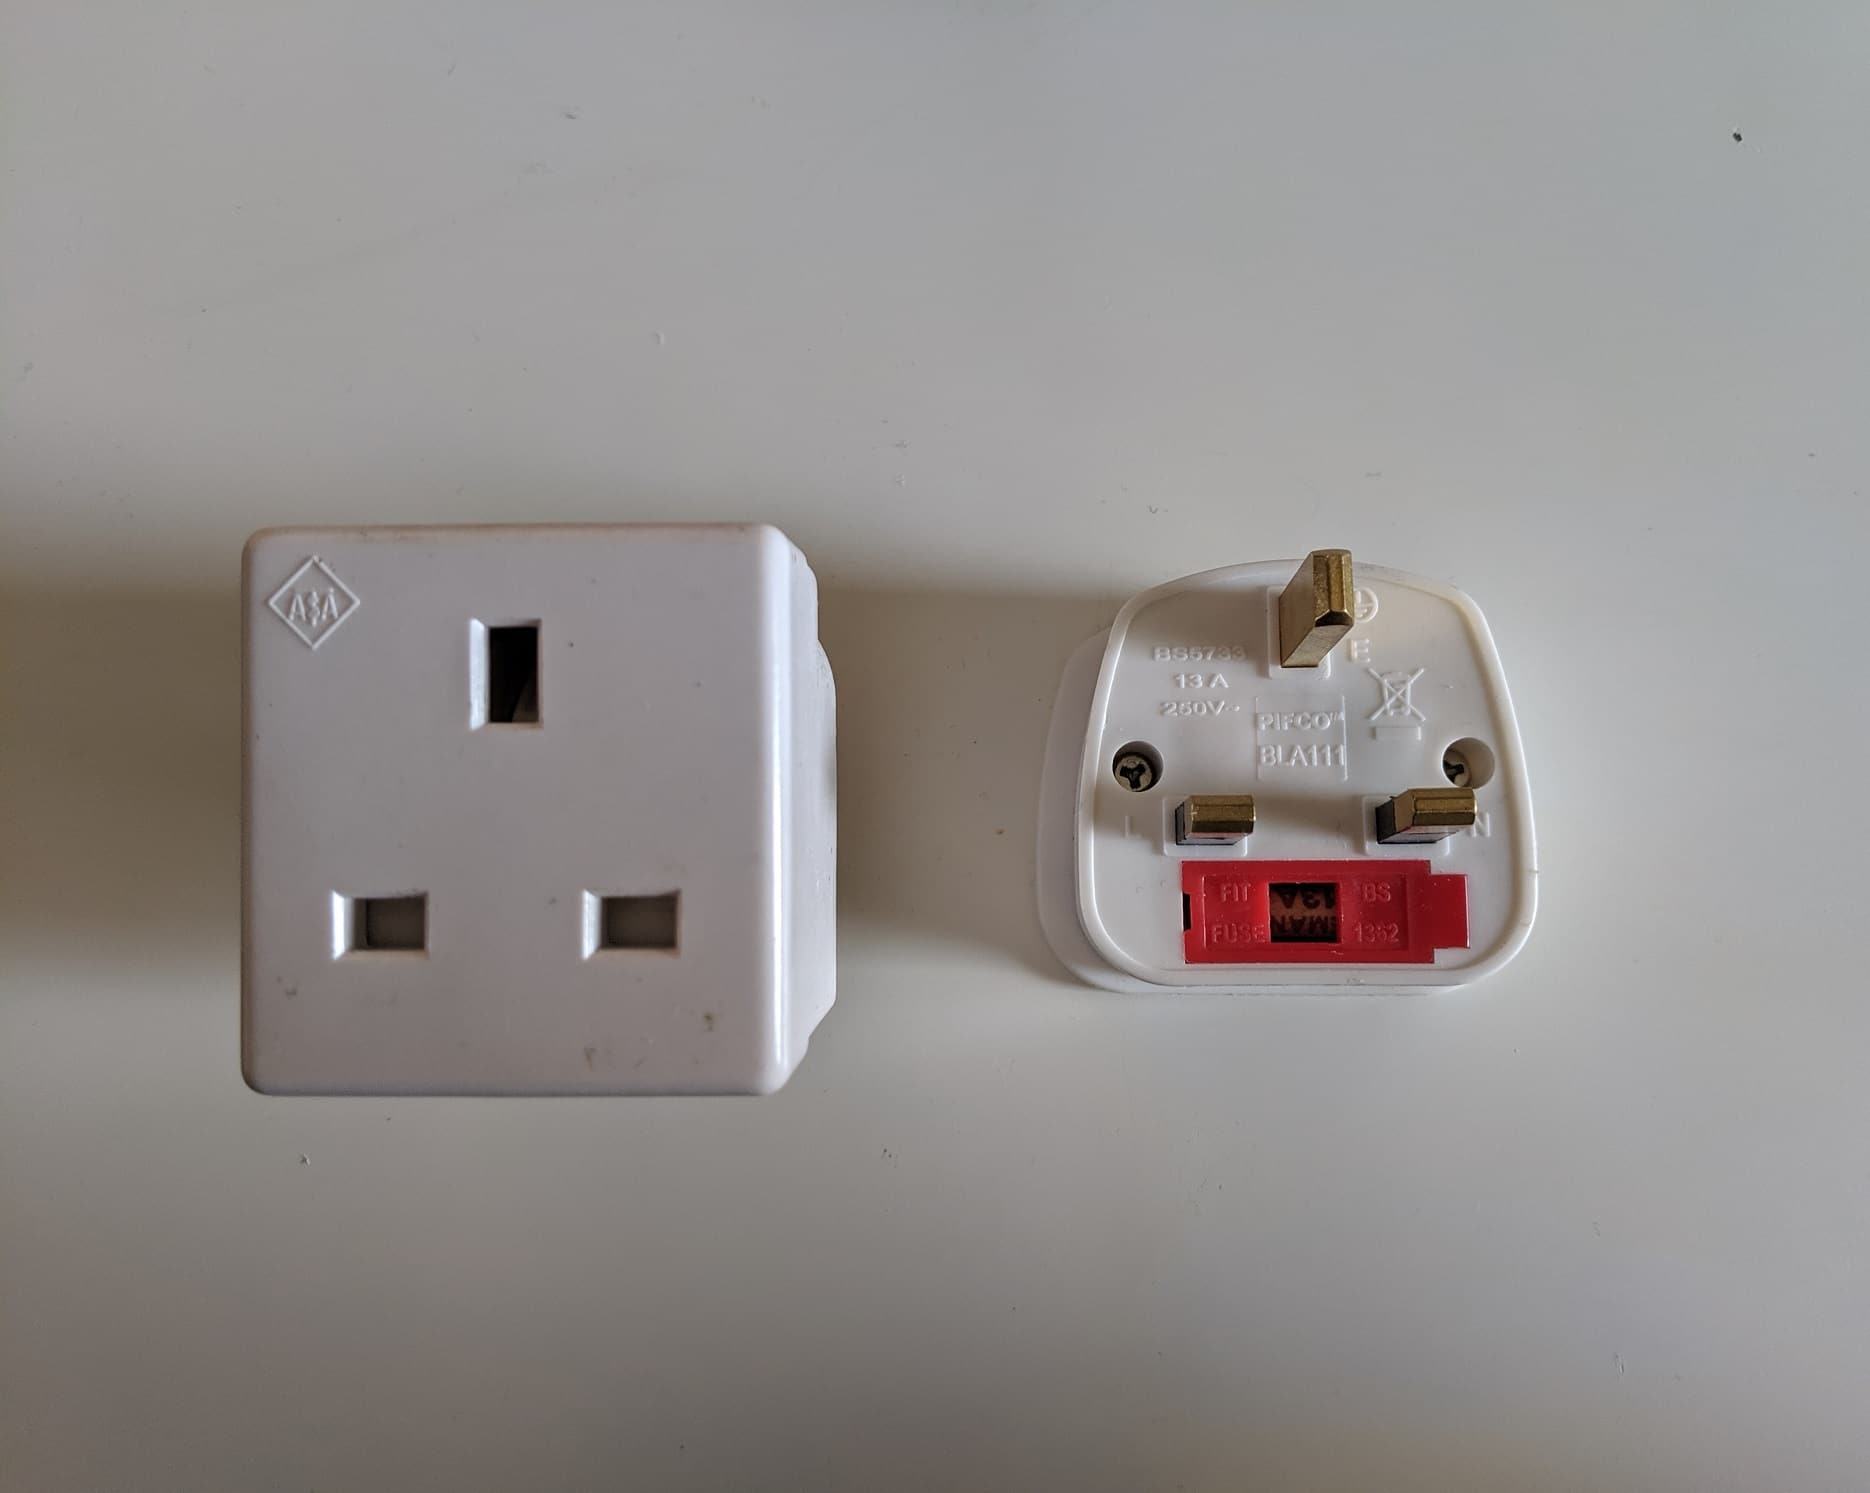 UK Type G electrical plug and plug socket